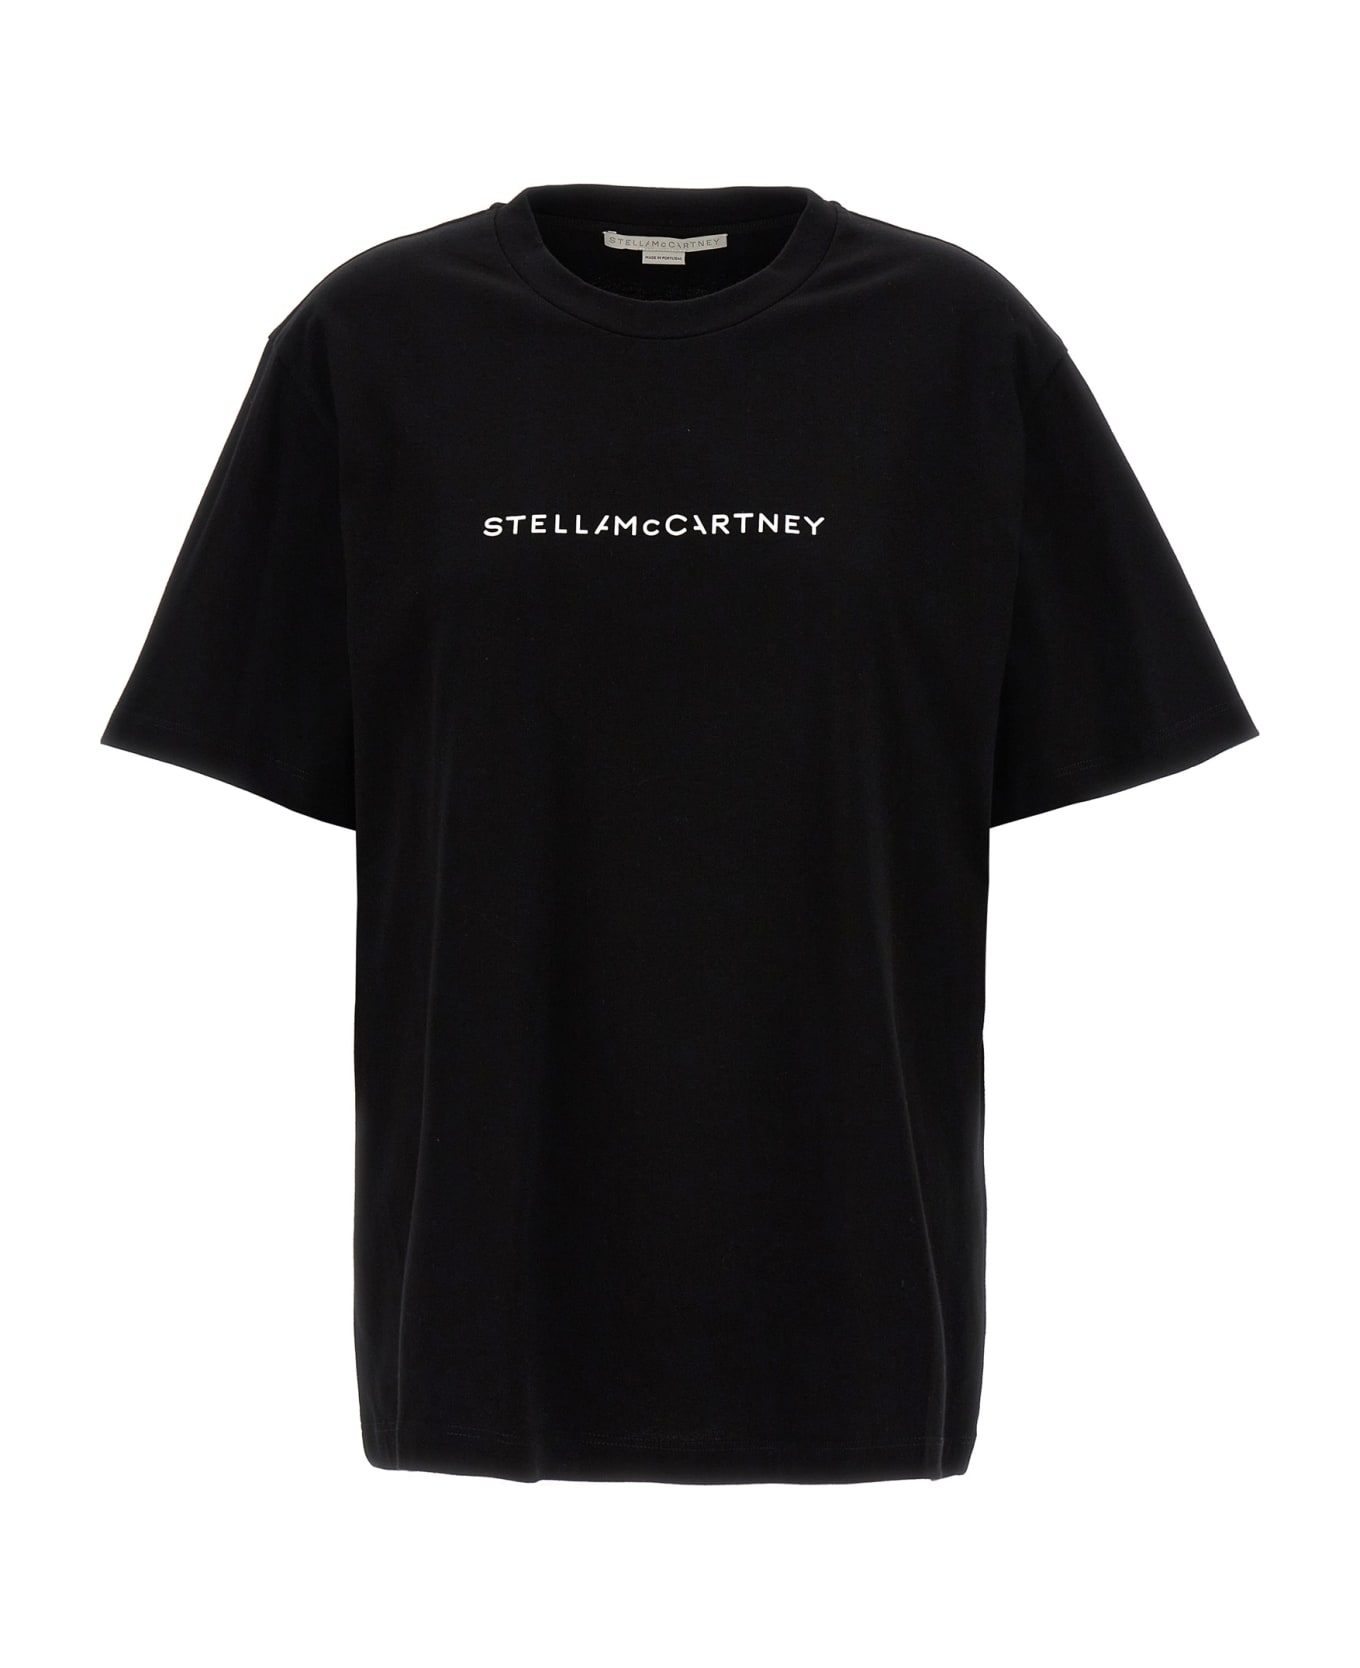 Stella McCartney 'iconic' T-shirt - Black Tシャツ